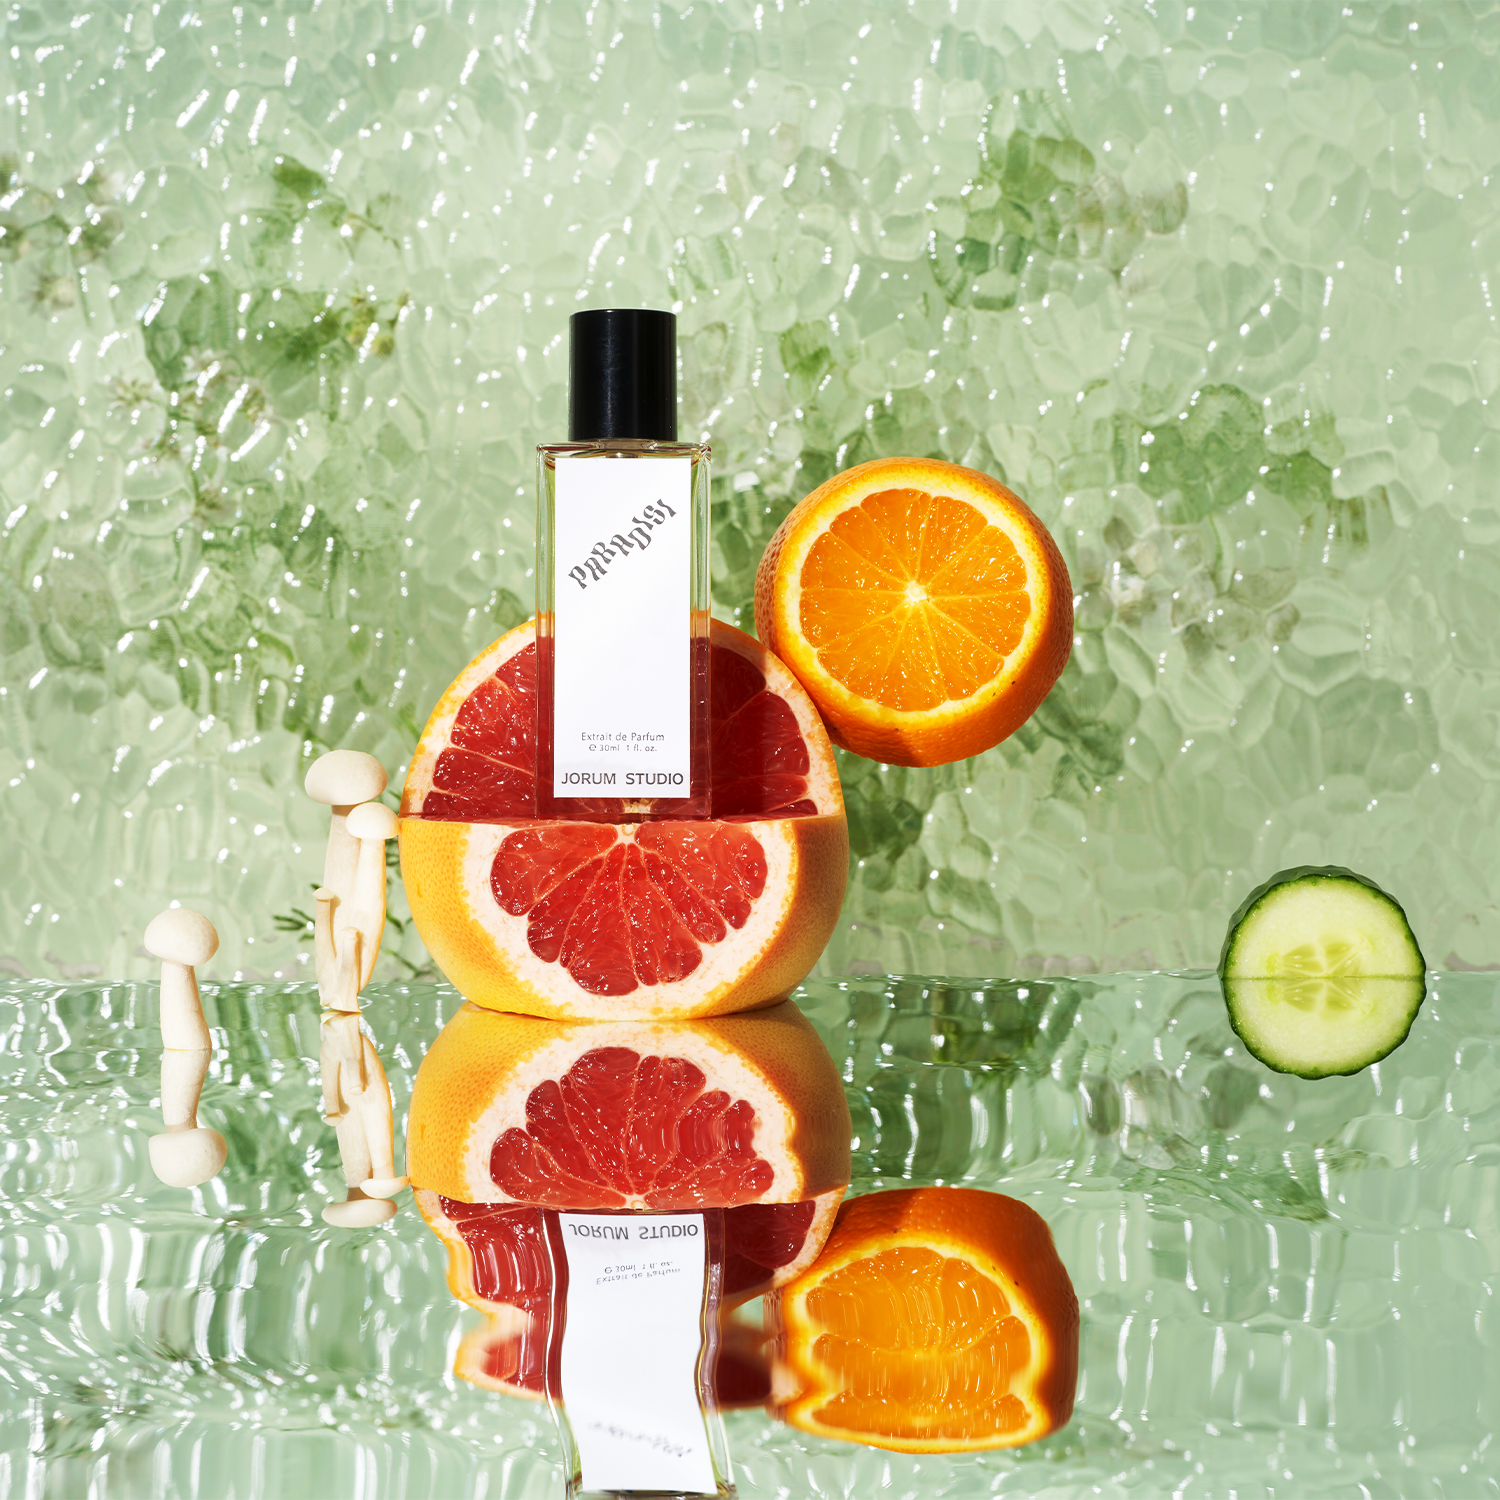 Jorum Studio Paradisi perfume bottle arranged in a still-life featuring grapefruit, orange, cucumber, enoki mushrooms against a watery pale green background